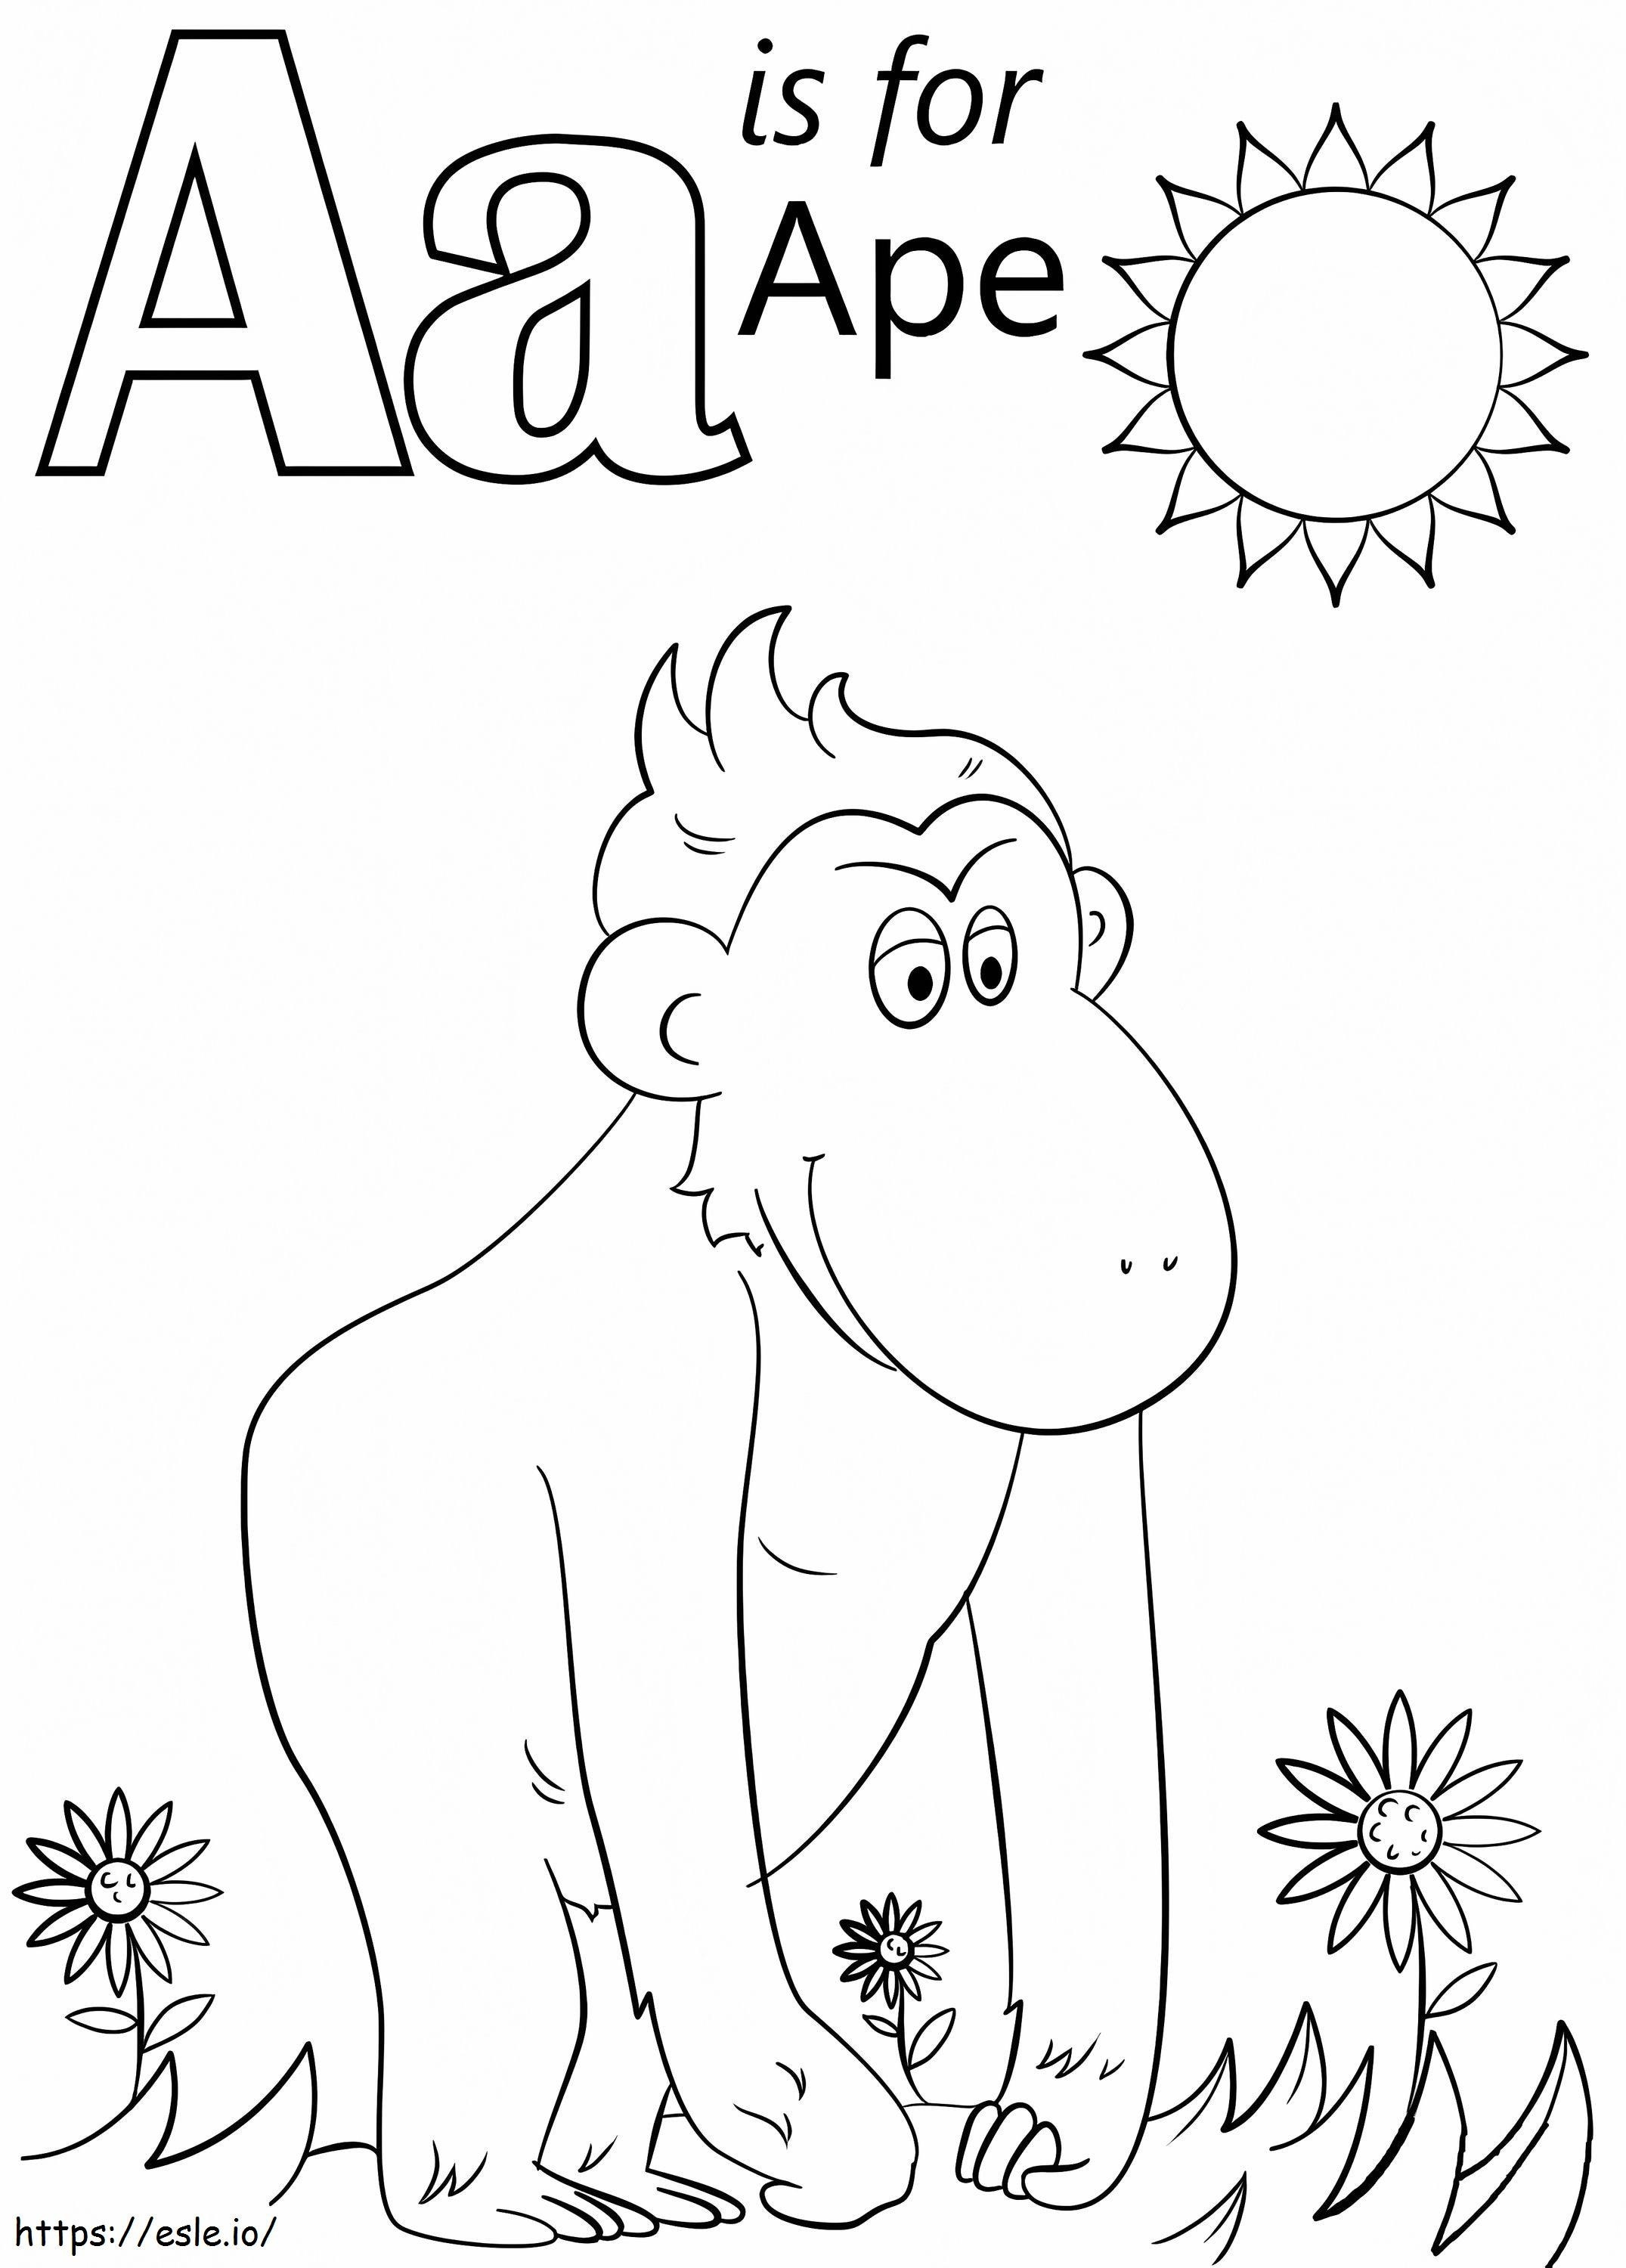 Macaco Letra A para colorir